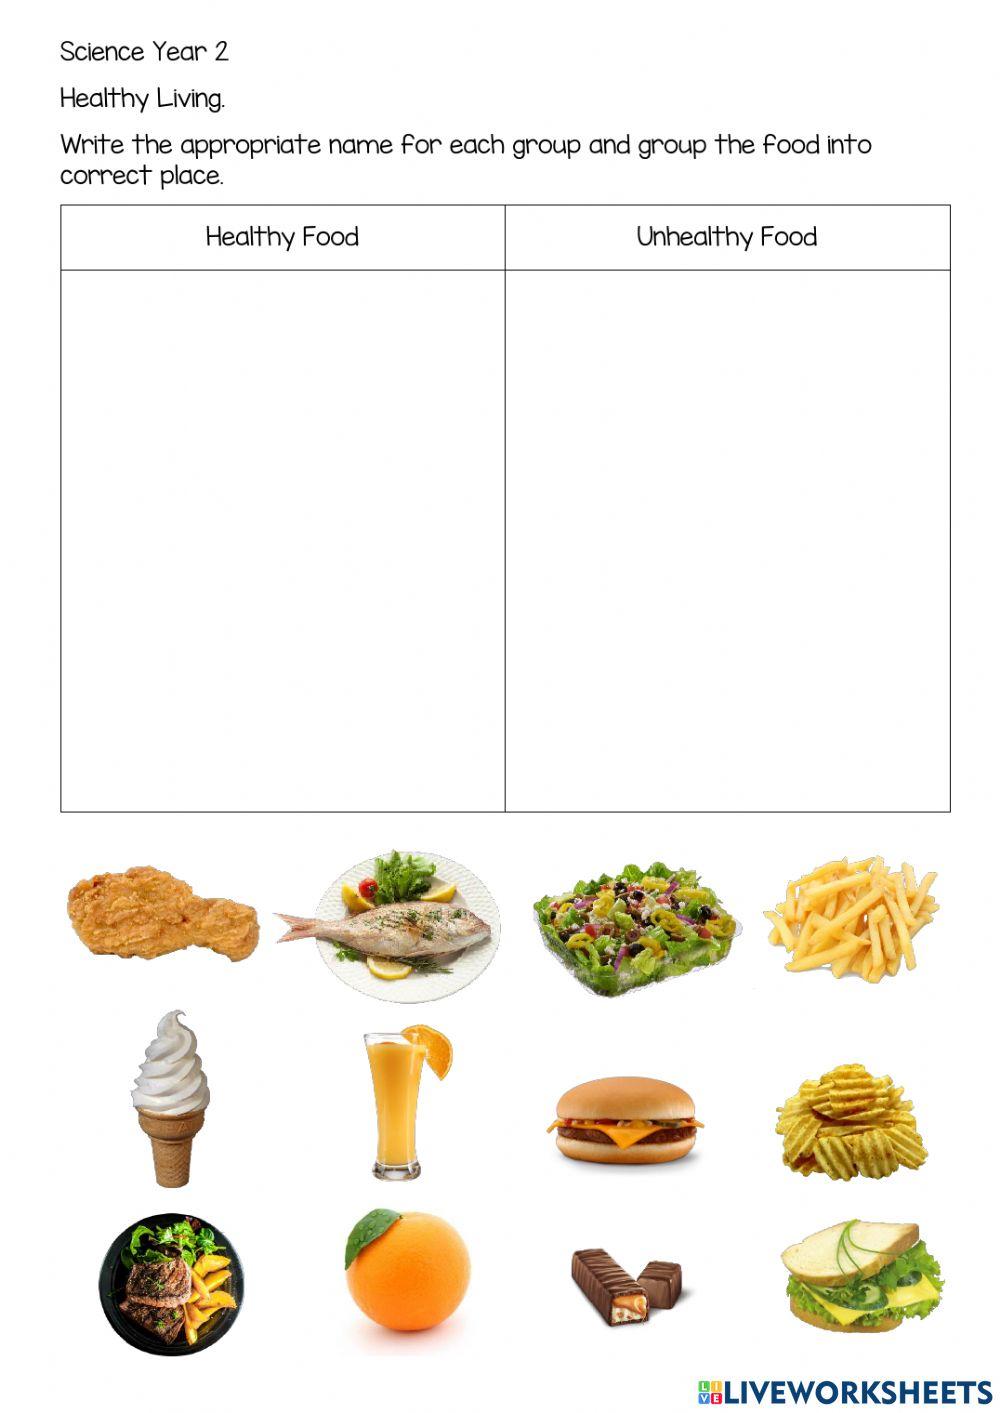 Healthy Food and Unhealthy Food